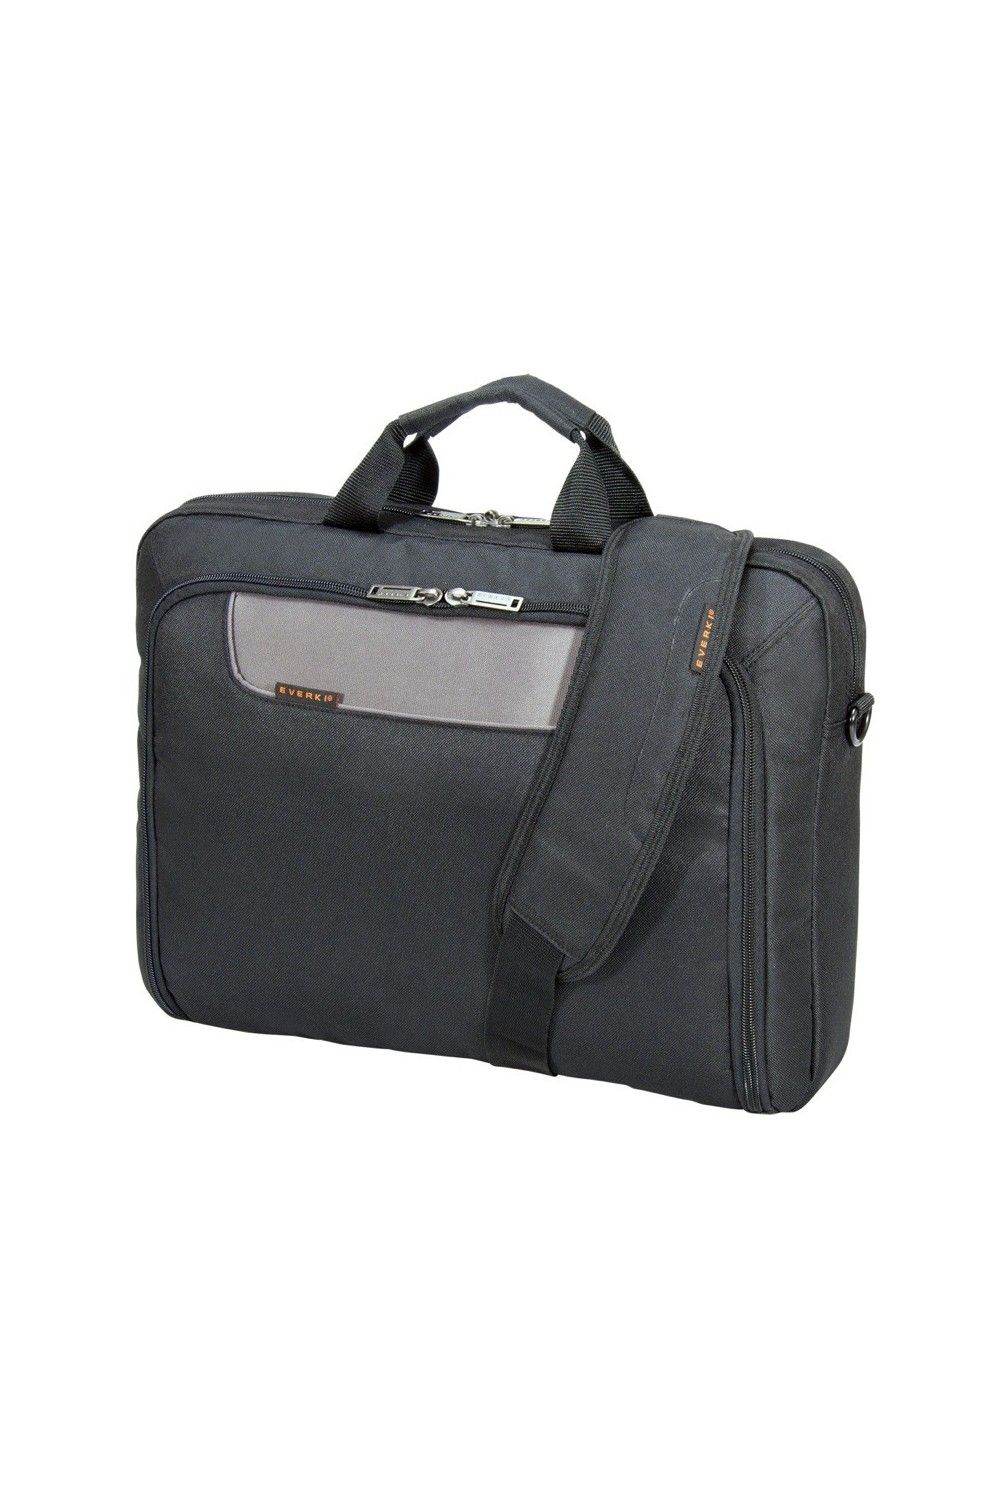 Laptop bag Advance Everki 17.3 inches